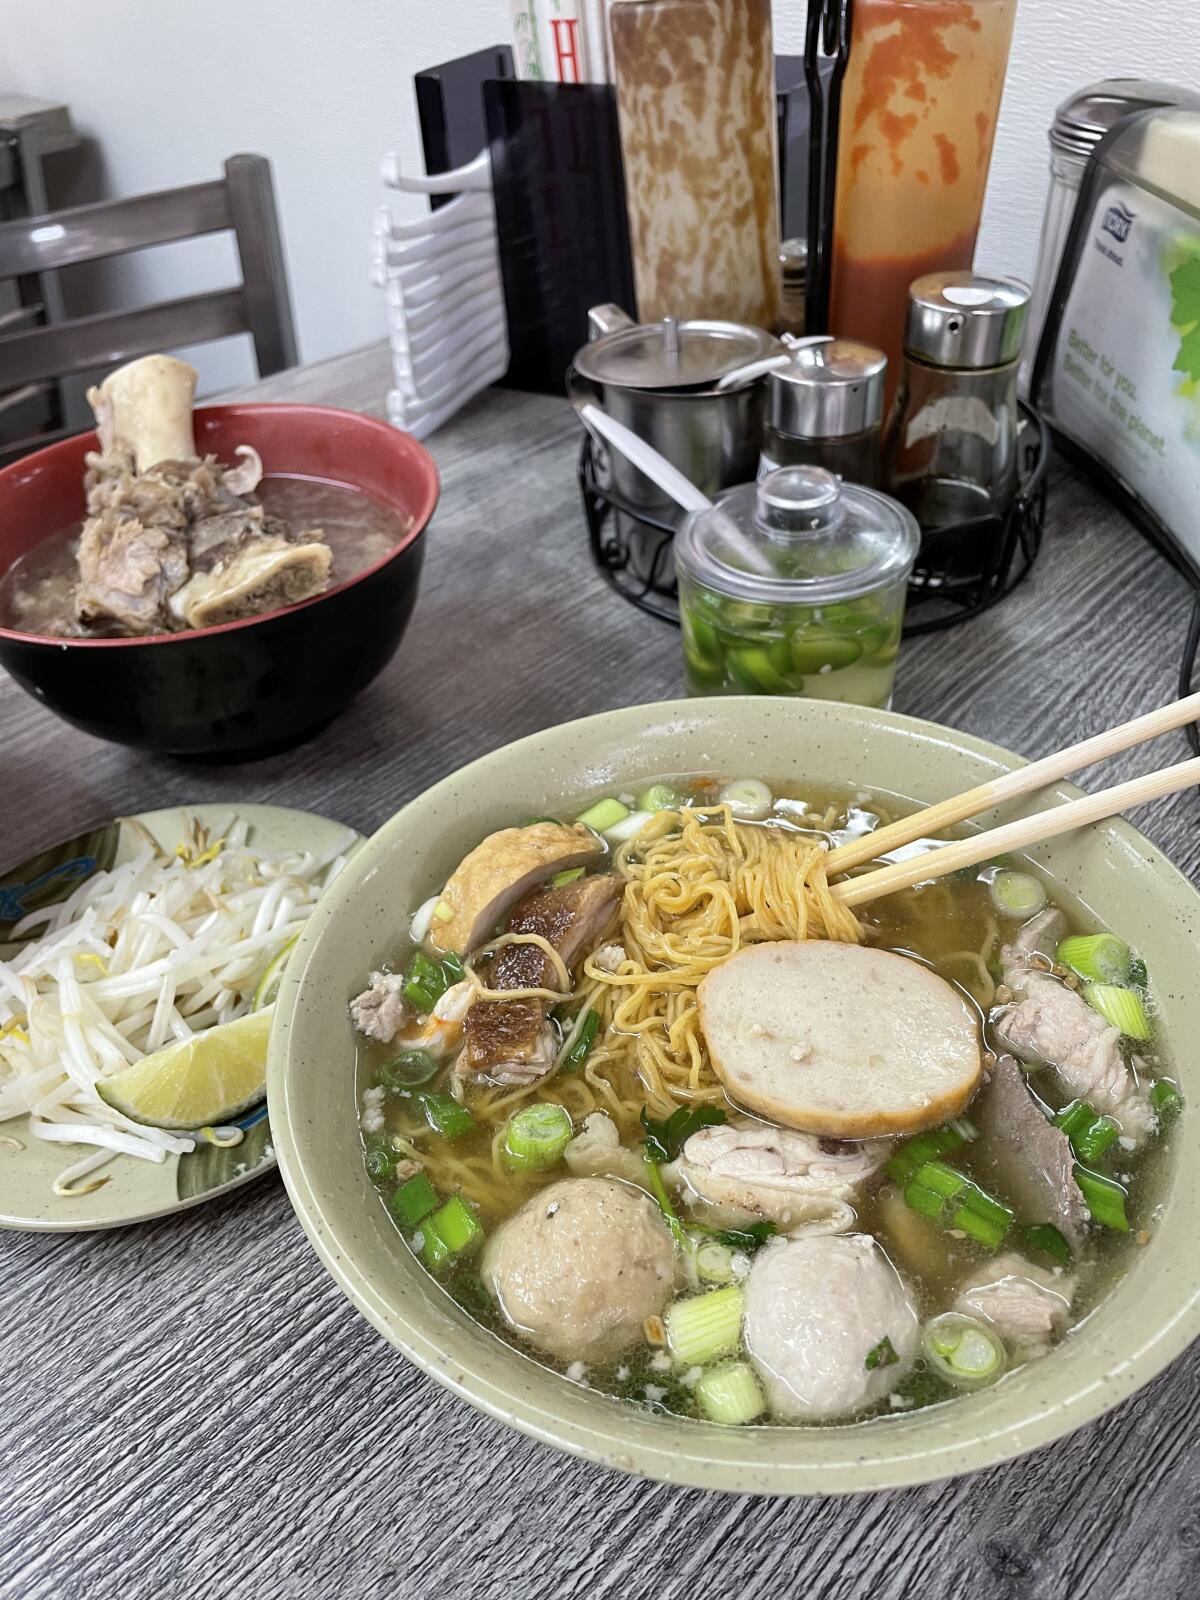 Hu tieu nam vang served as a soup at Trieu Chau, with the "Chao Chow" option.